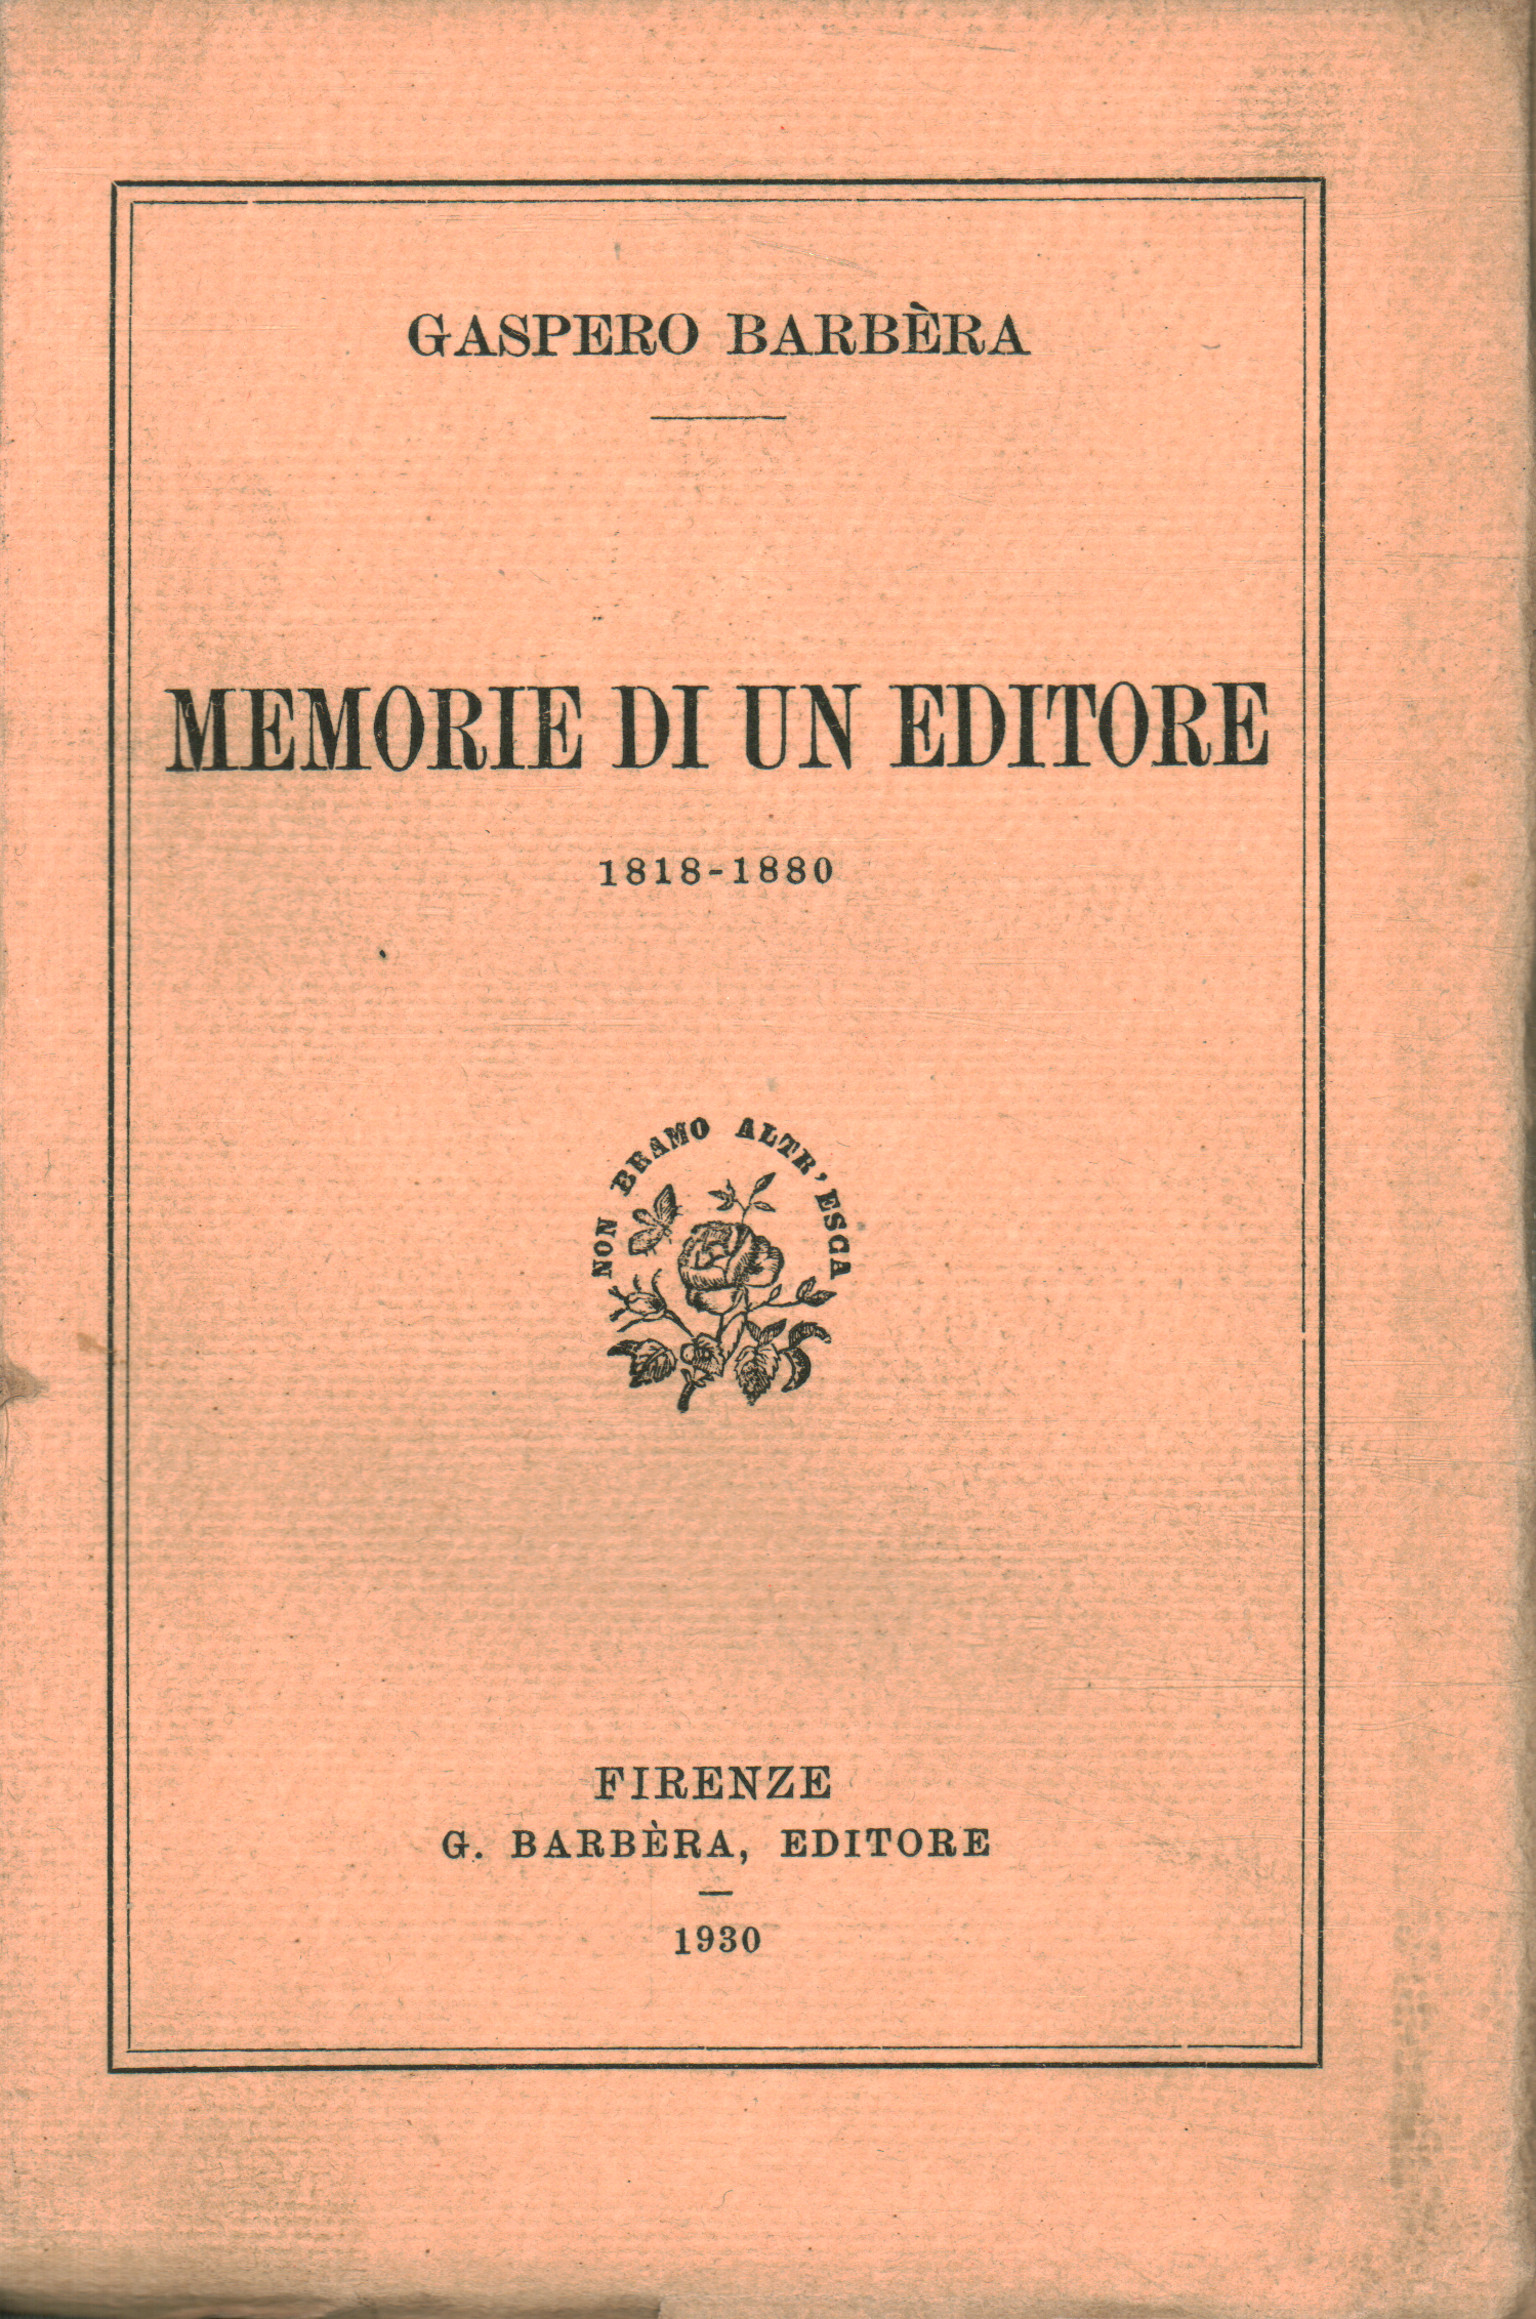 Libri - Storia - Biografie Diari/Memorie,Memorie di un editore